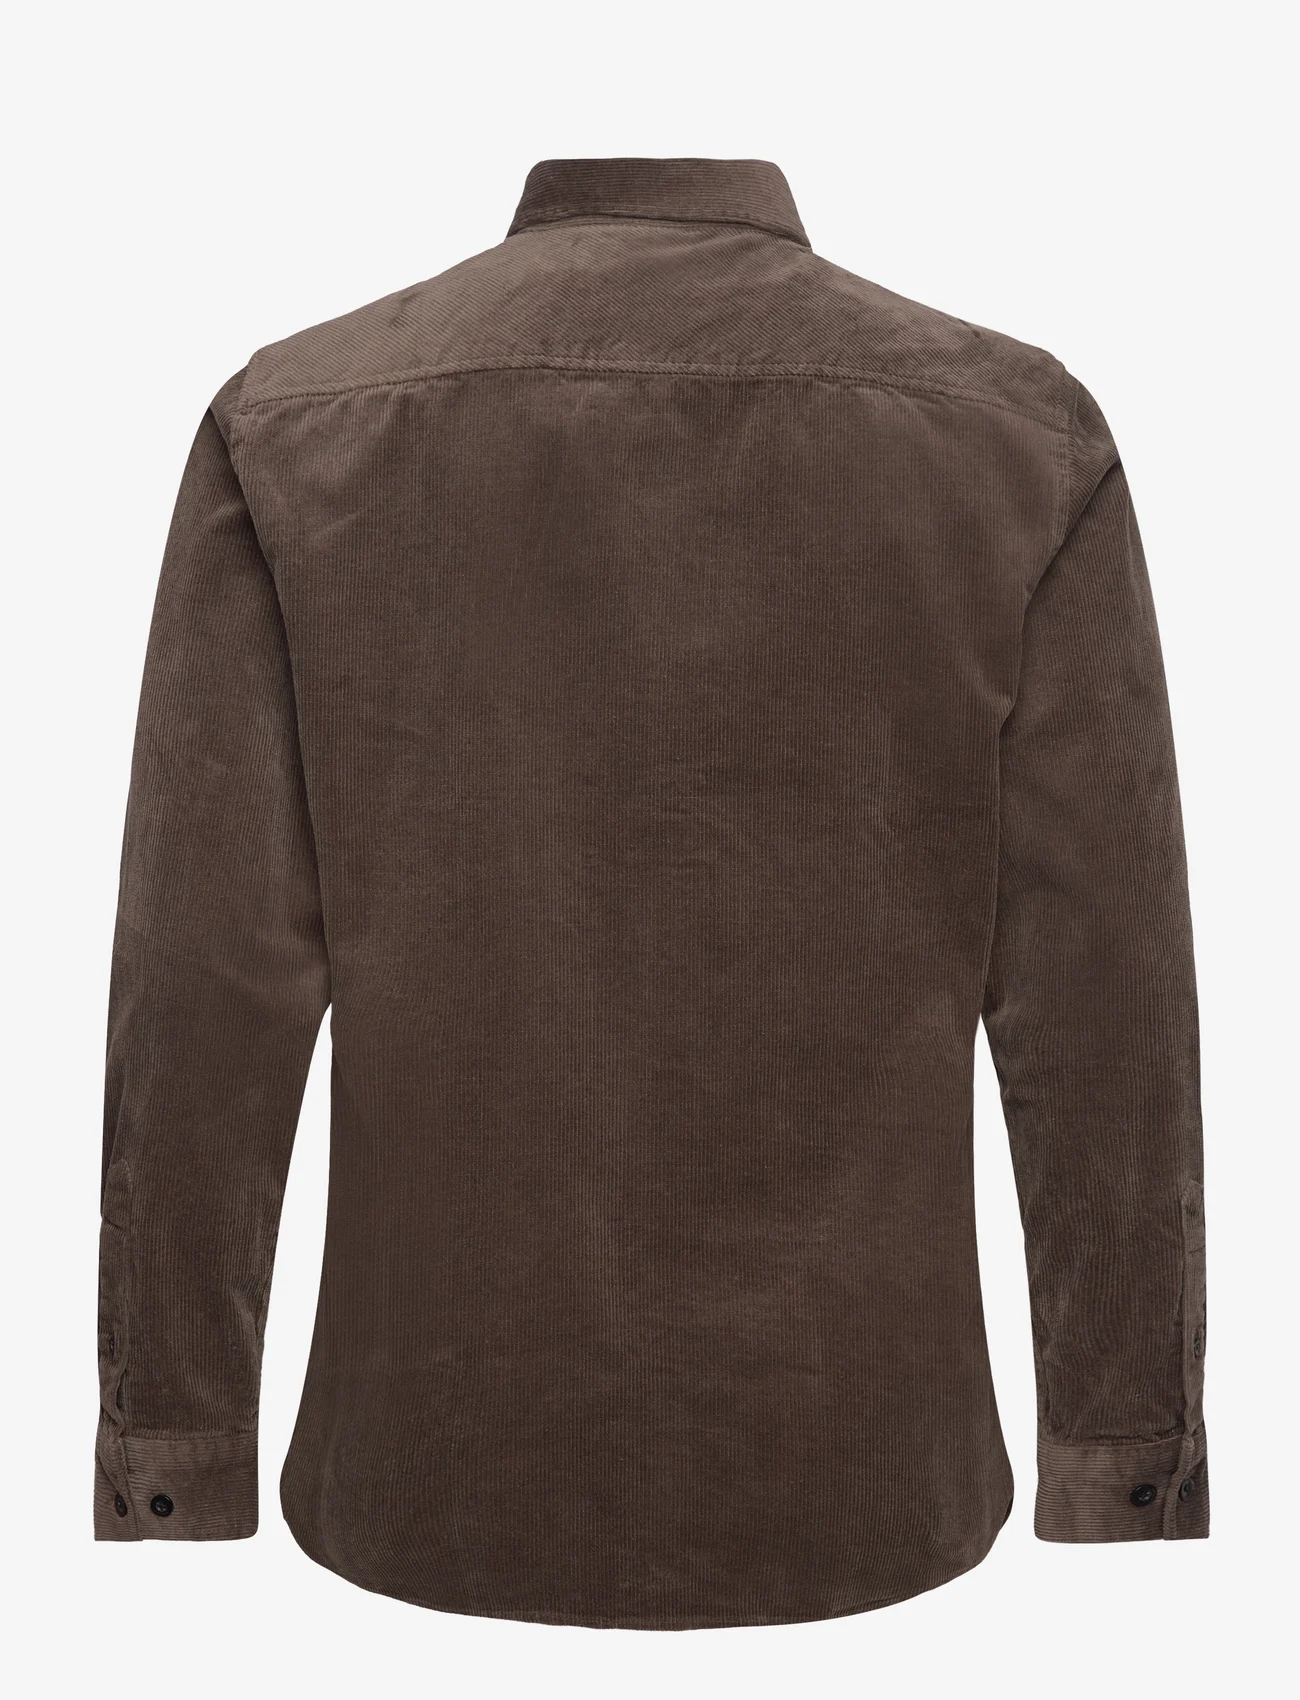 Anerkjendt - AKLEIF CORDUROY SHIRT - corduroy shirts - chocolate brown - 1